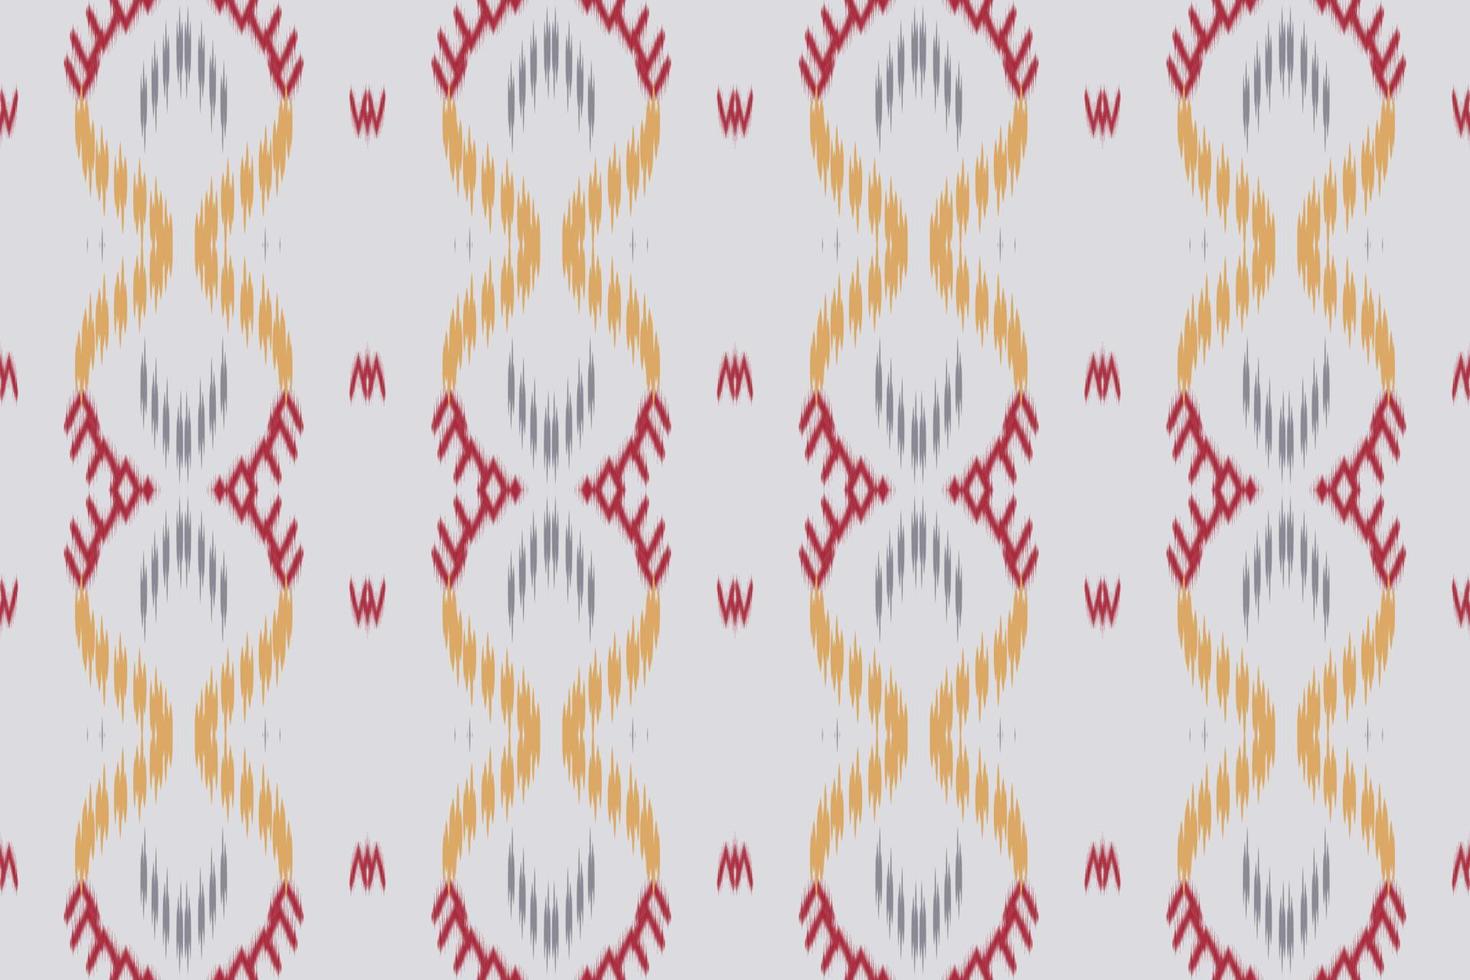 motivo ikat puntini tribale sfondo Borneo scandinavo batik boemo struttura digitale vettore design per Stampa saree Kurti tessuto spazzola simboli campioni